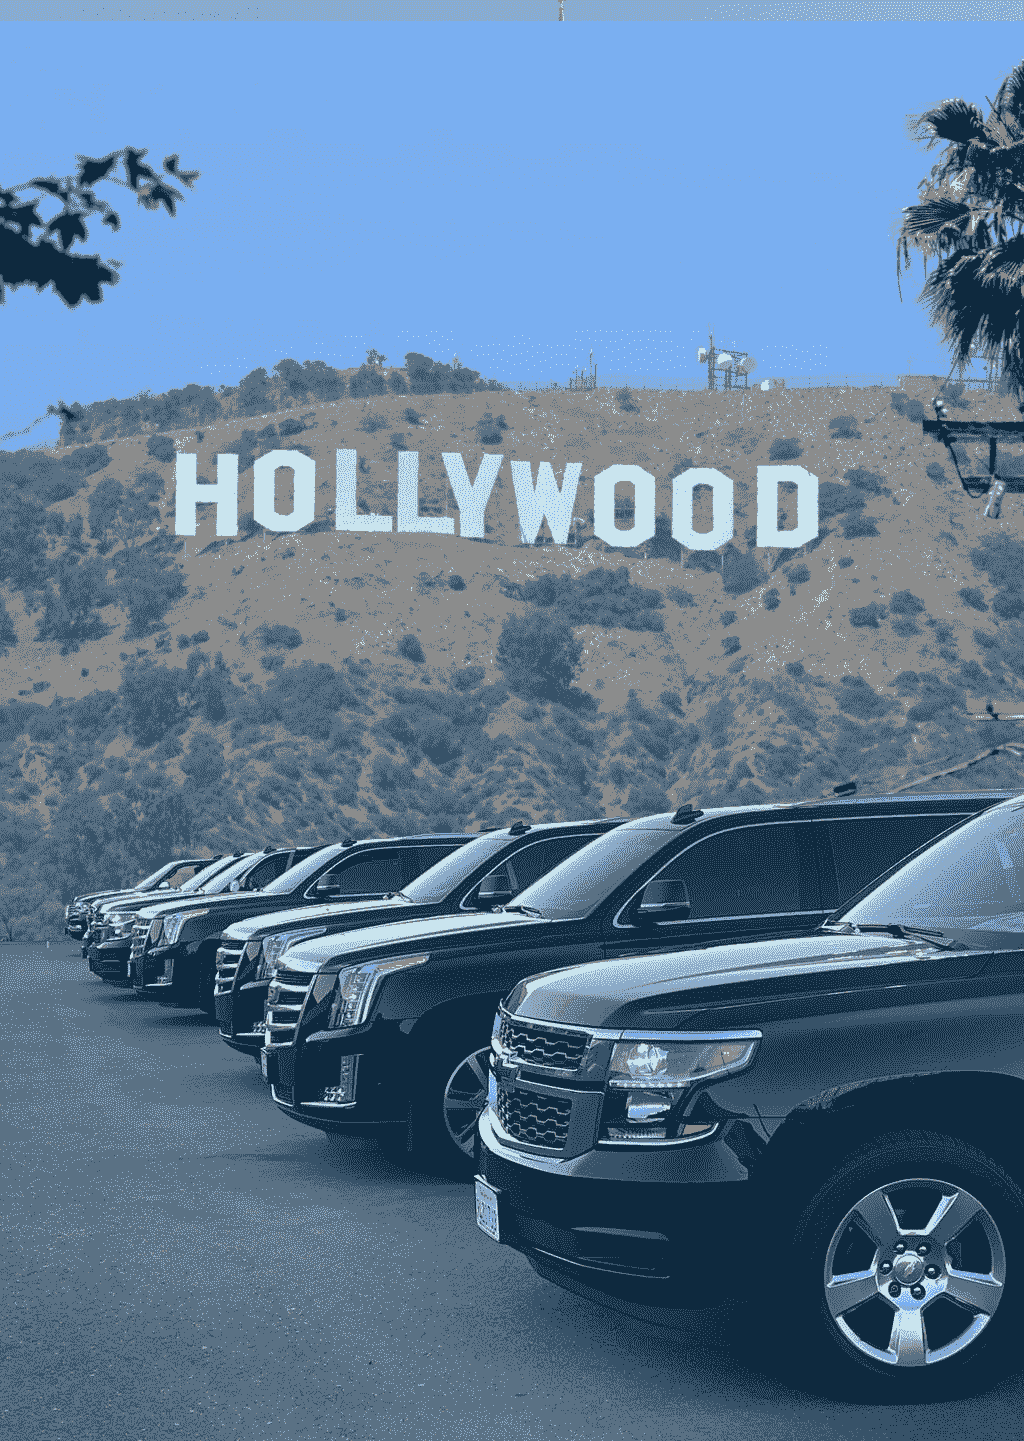 Los Angeles limo service